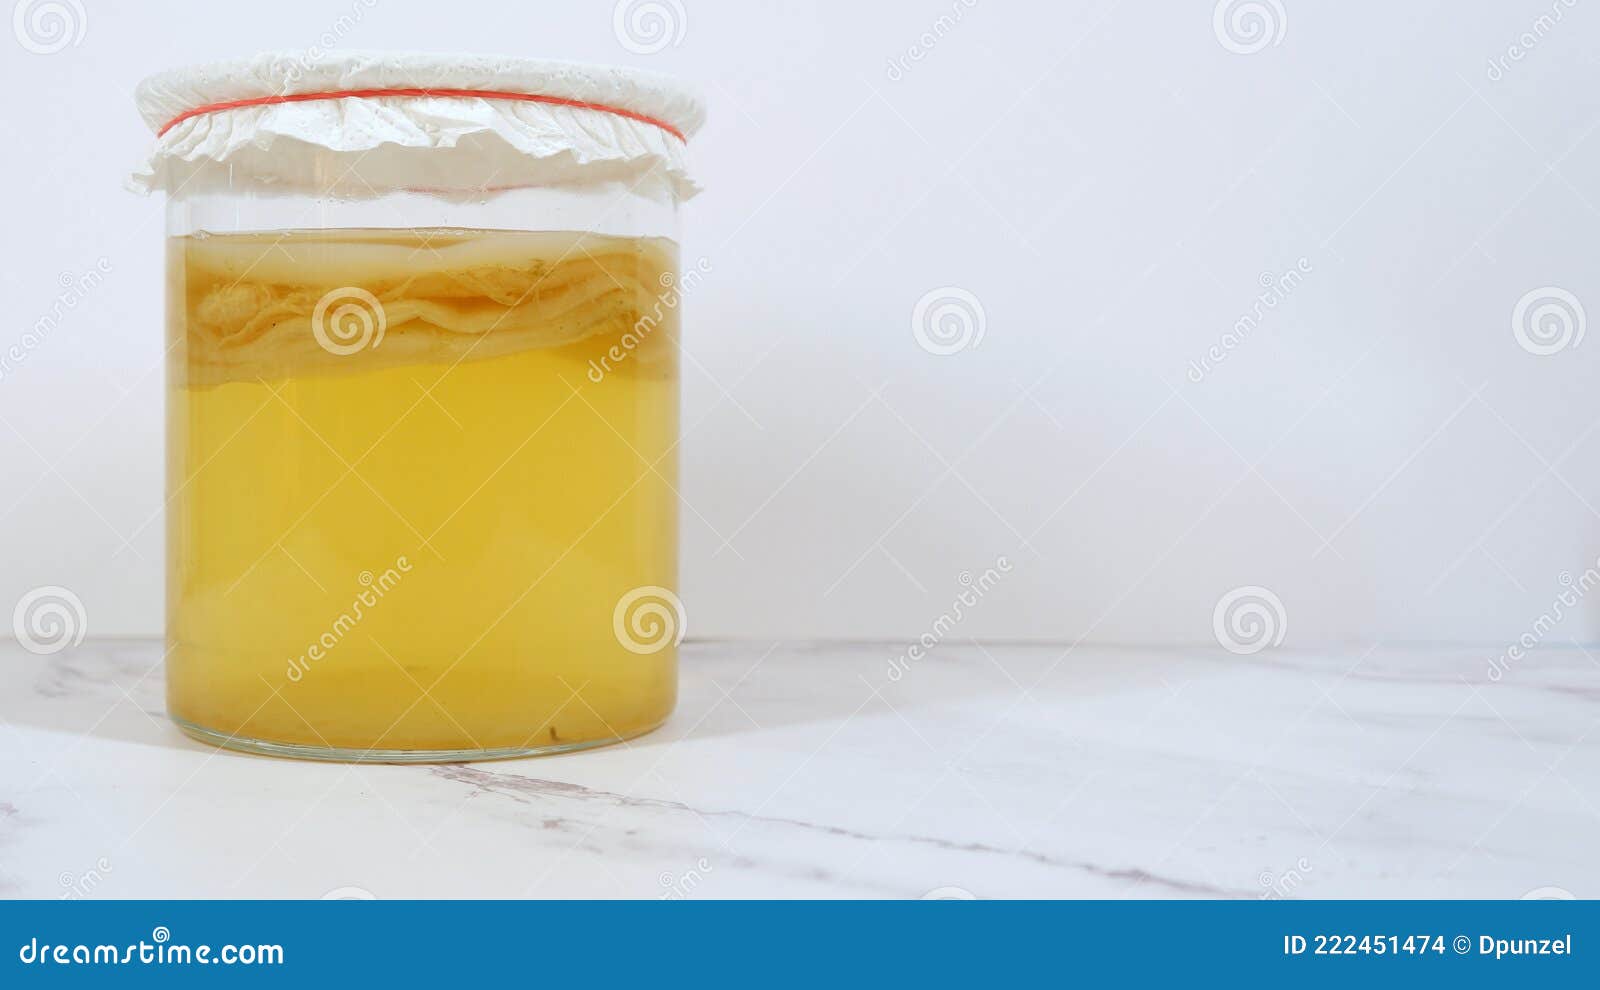 kombucha scoby ferments in a glass